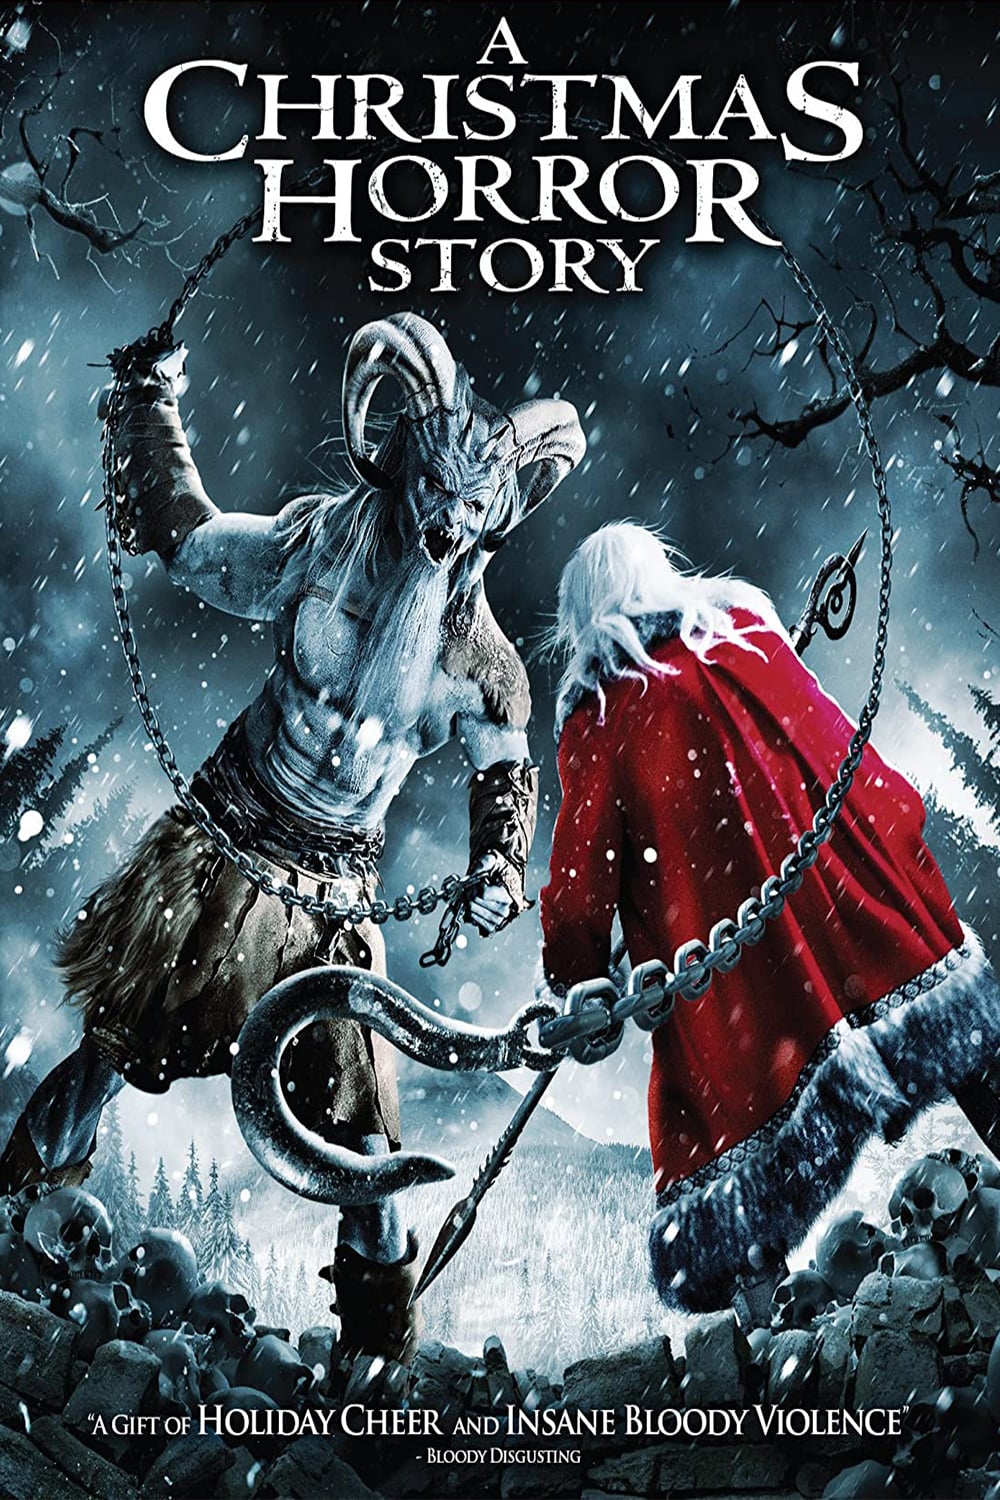 Plakat von "A Christmas Horror Story"